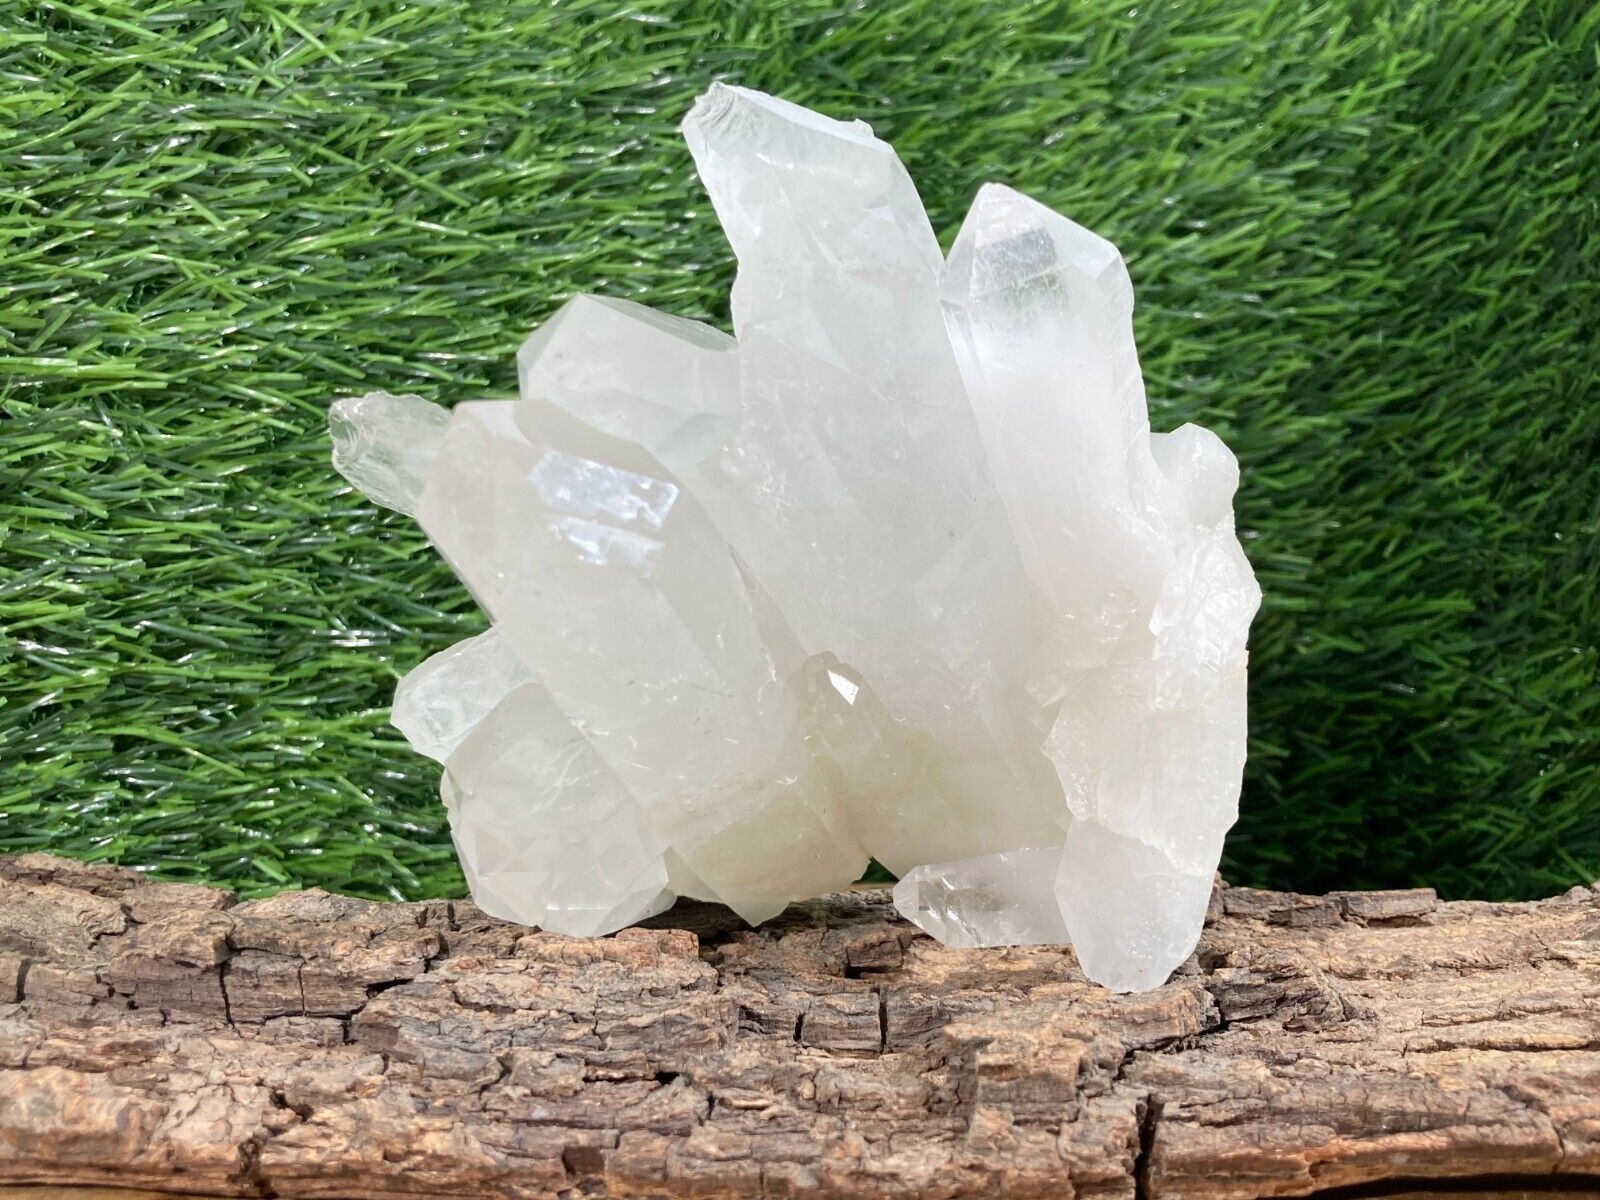 430g Rare Big Size Healing White Himalayan Samadhi Crystal Minerals Quartz Stone